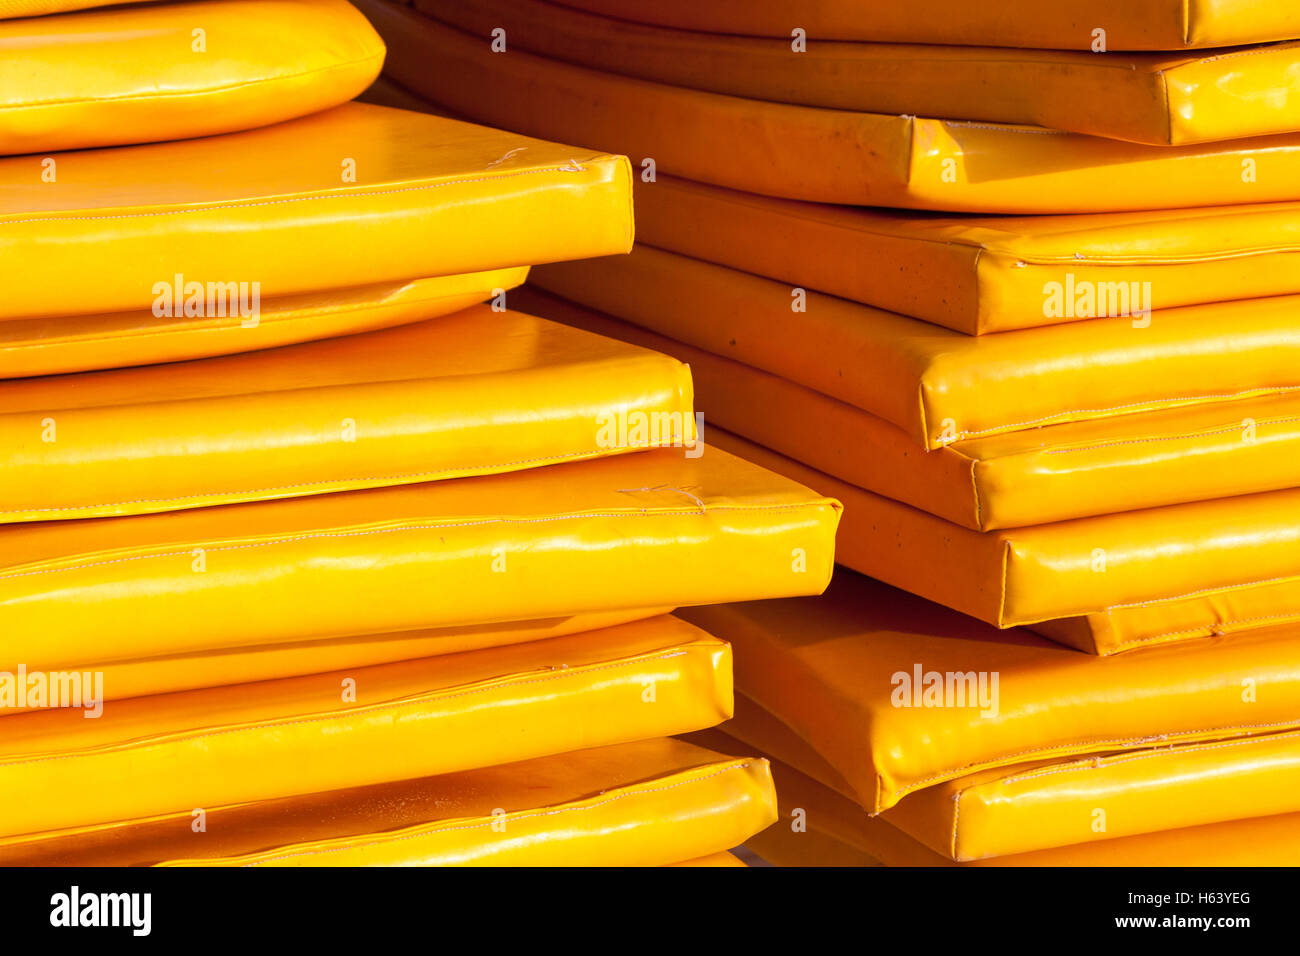 yellow sun bed mattresses Stock Photo